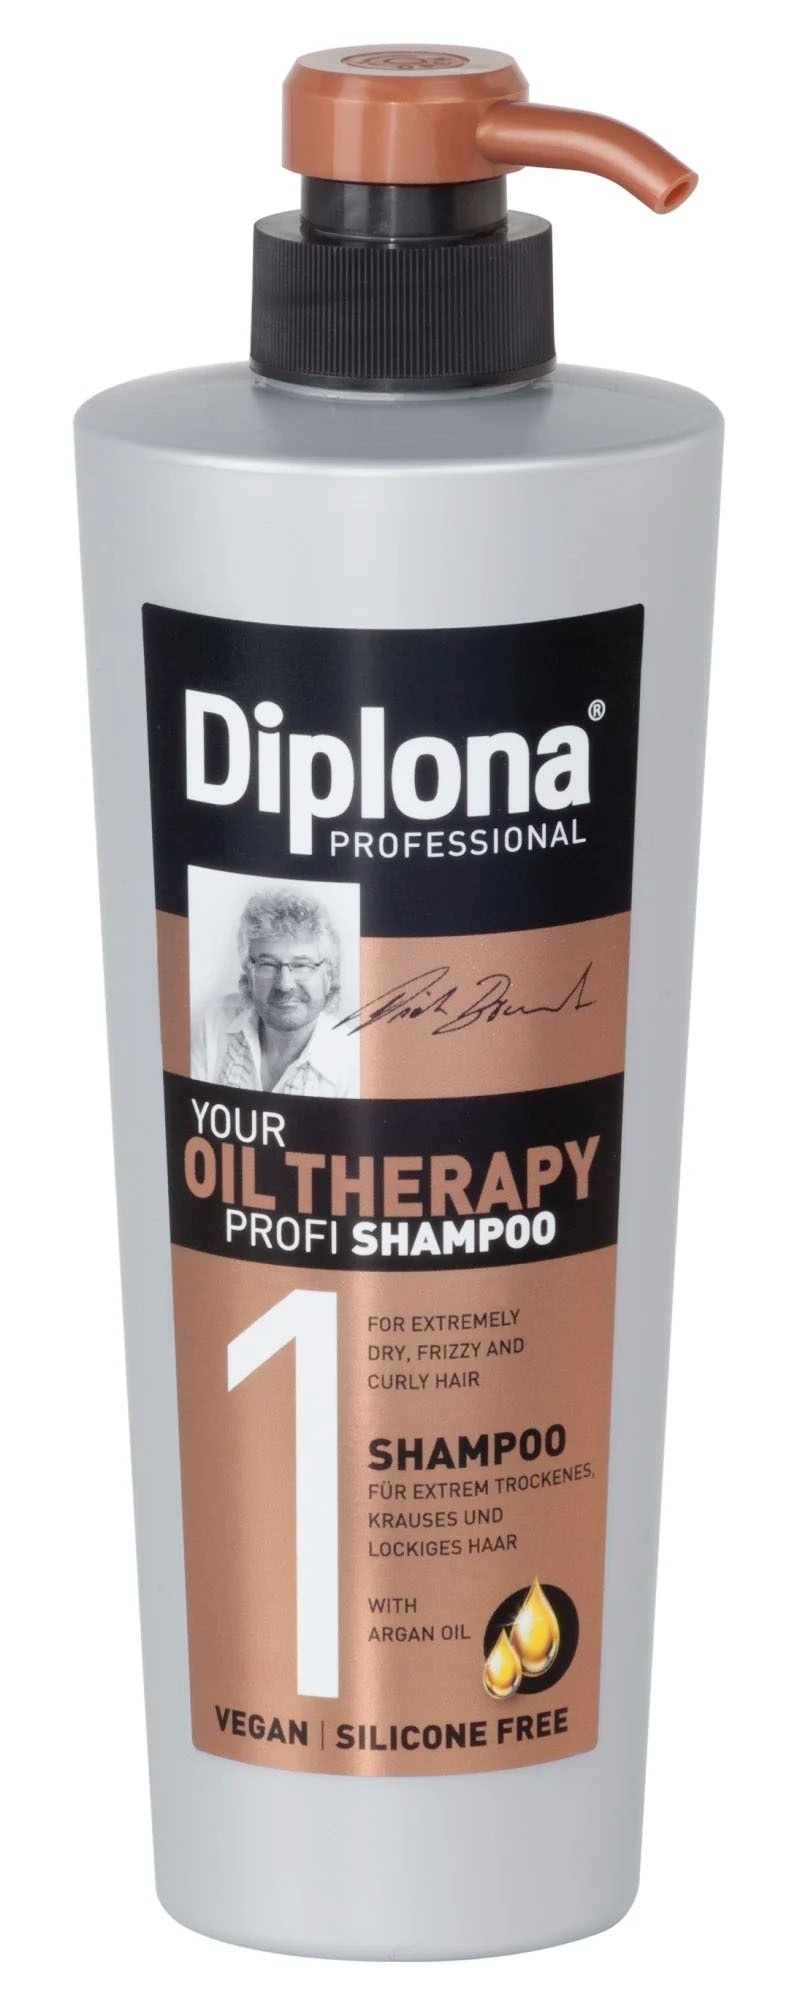 Diplona shampoo argan oil 600ml